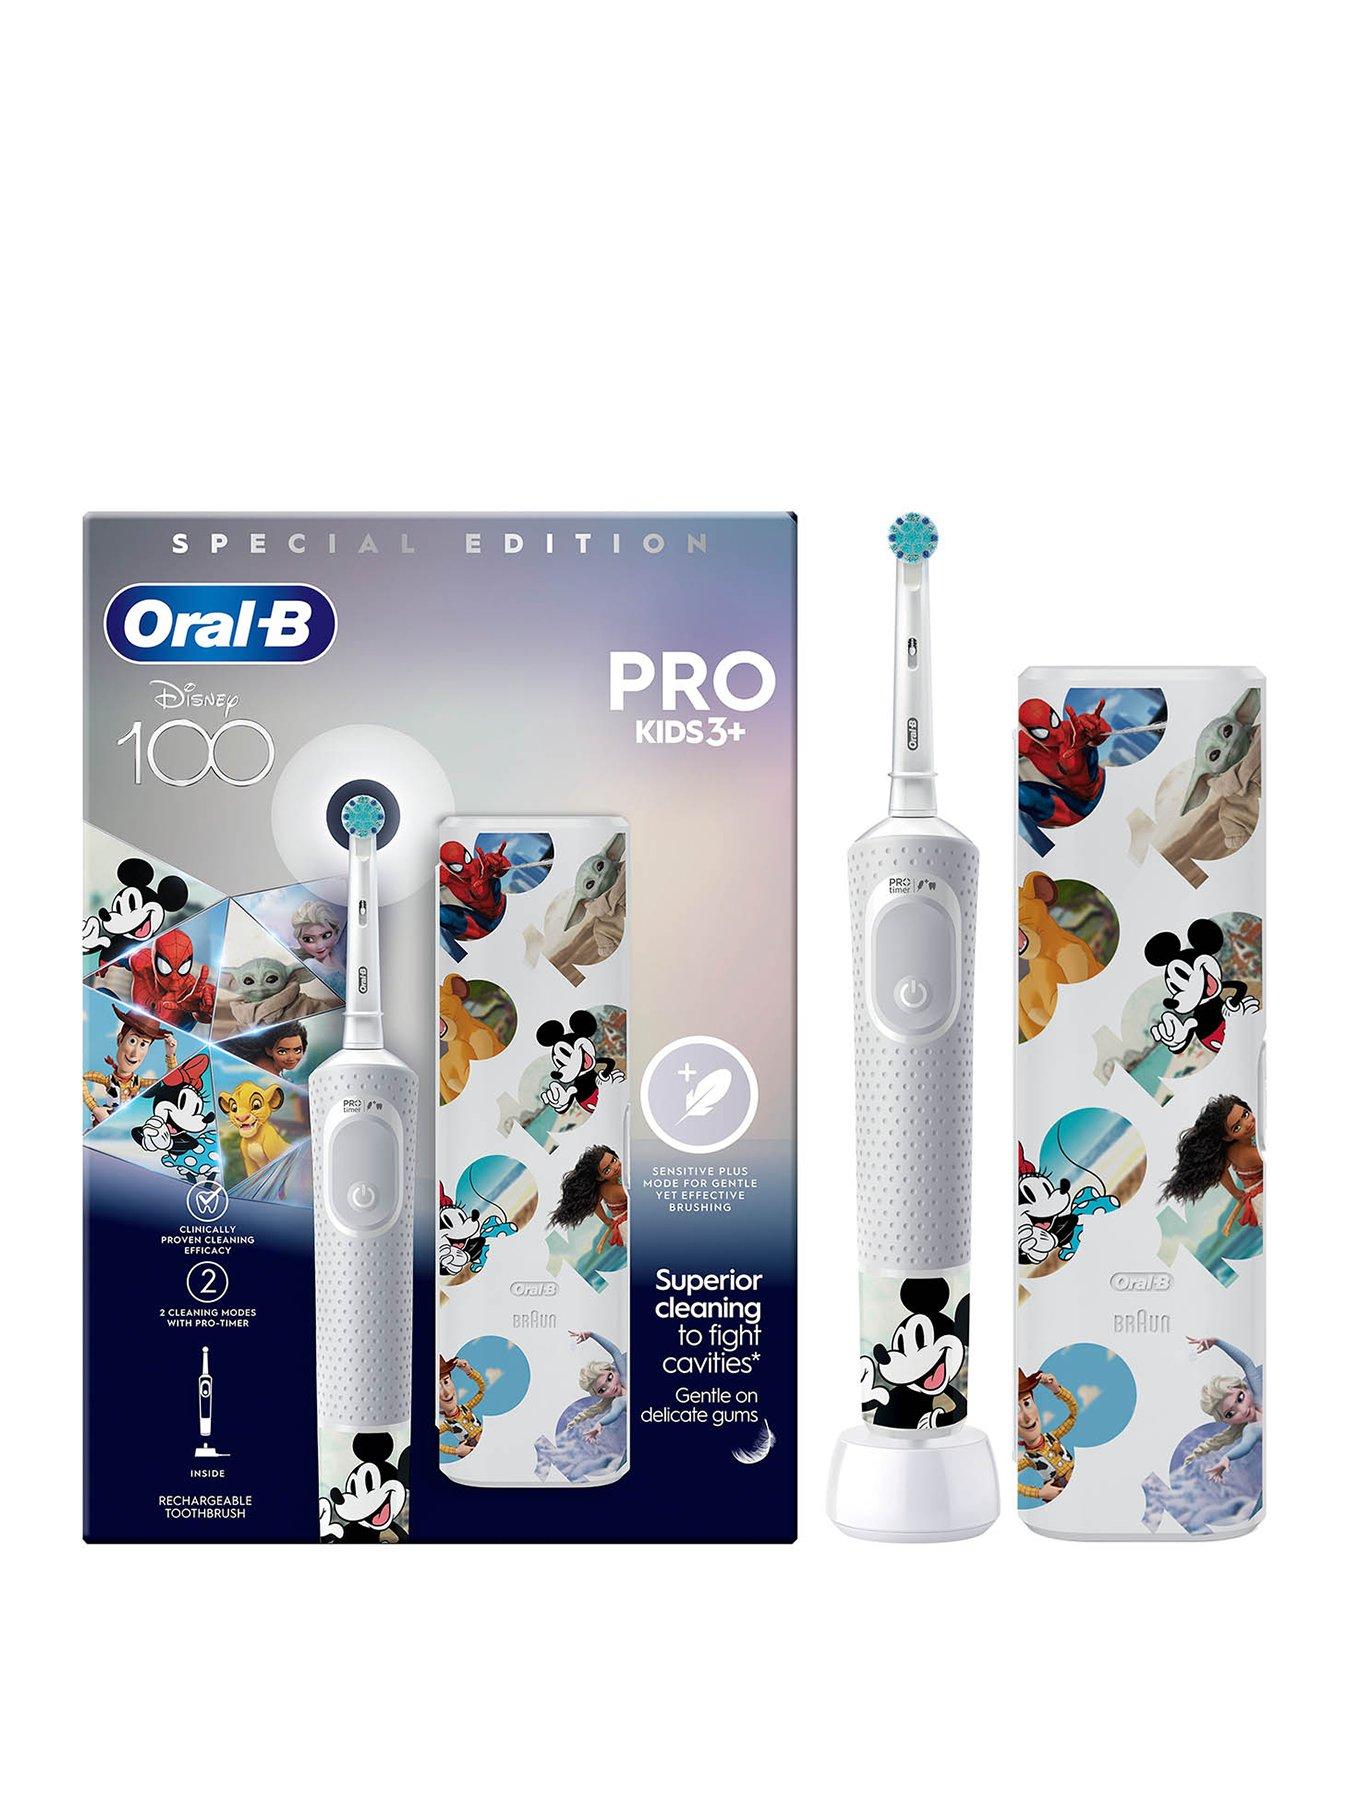 Oral-B Vitality Pro Kids Giftset - Disney 100 Years